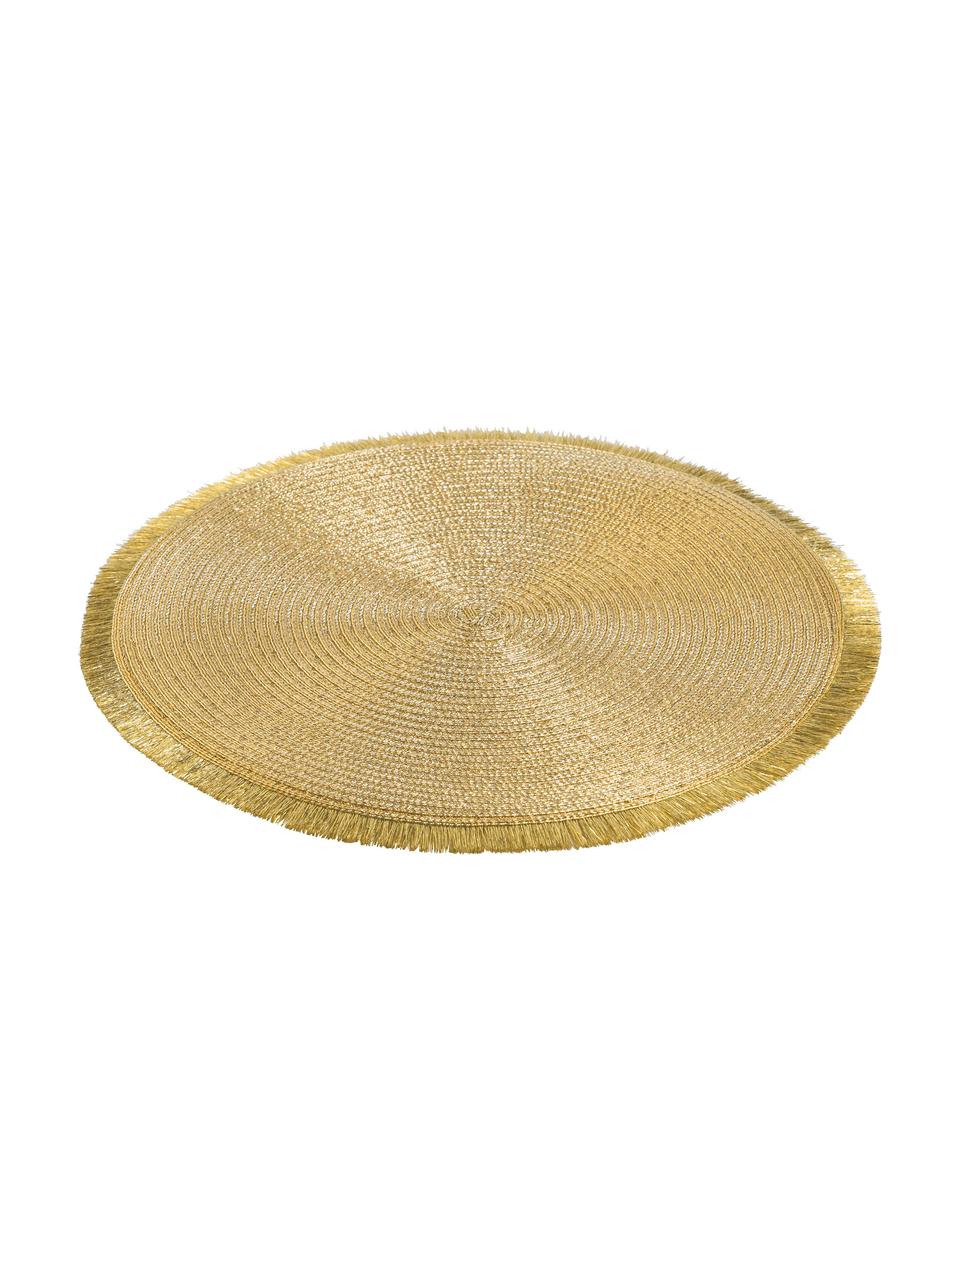 Runde Kunststoff-Tischsets Linda in Gold mit Fransen, 6 Stück, Kunststoff, Goldfarben, Ø 38 cm